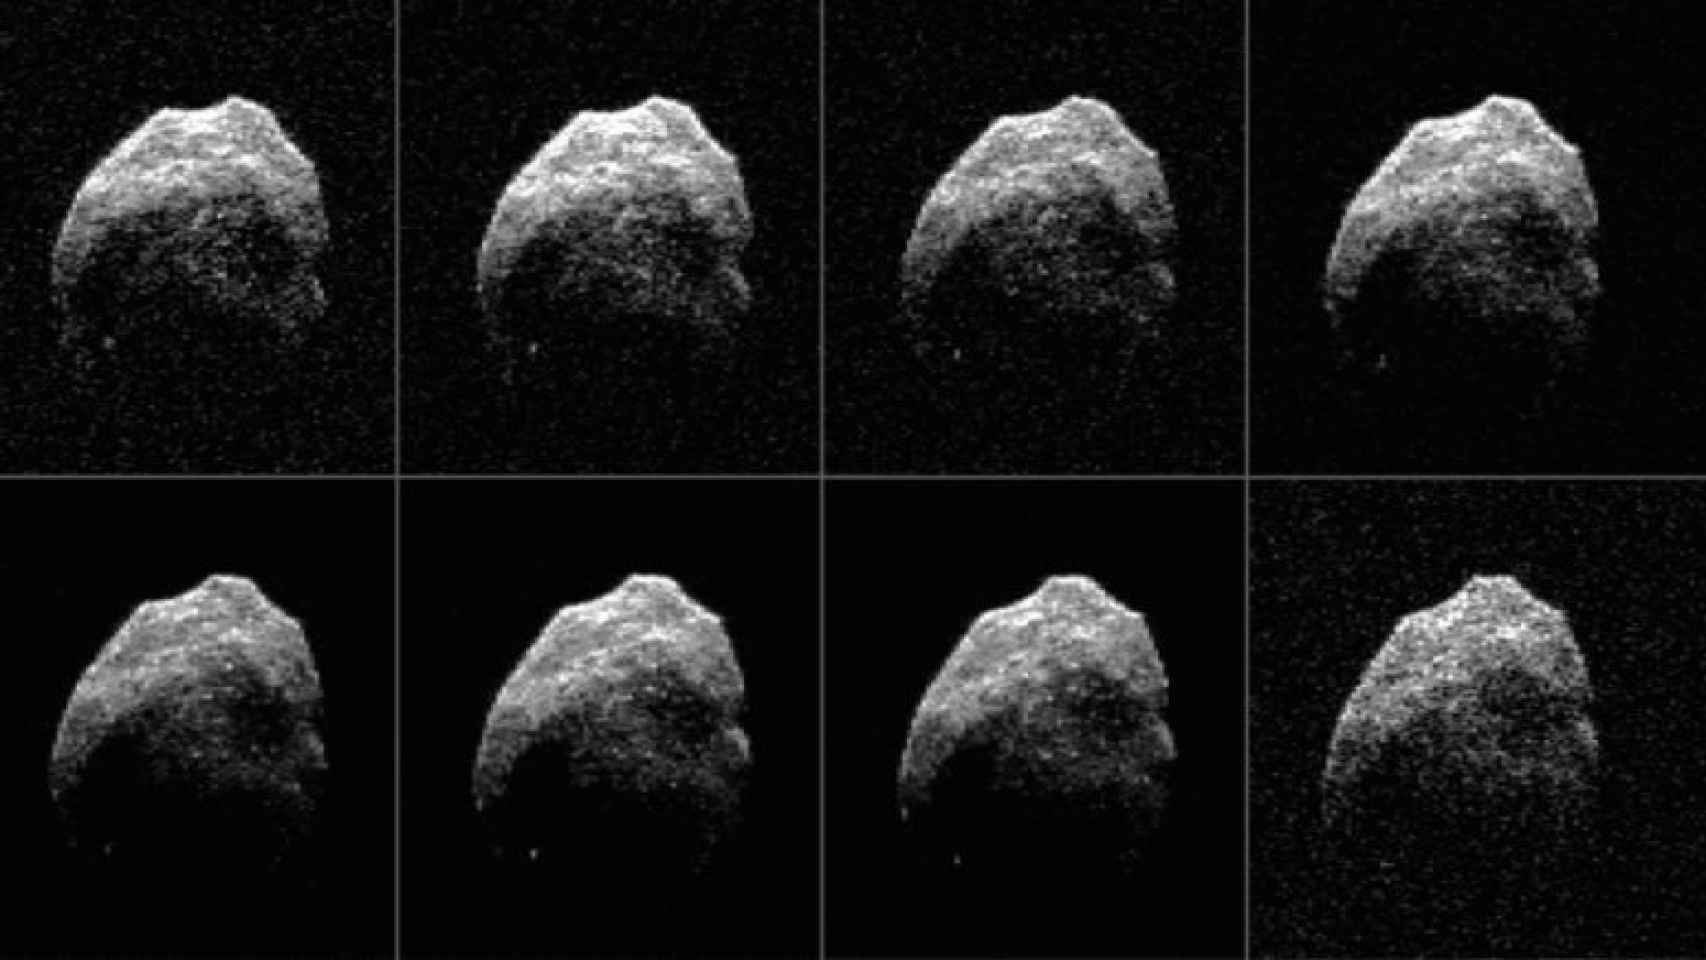 Asteroide 2015 TB145.